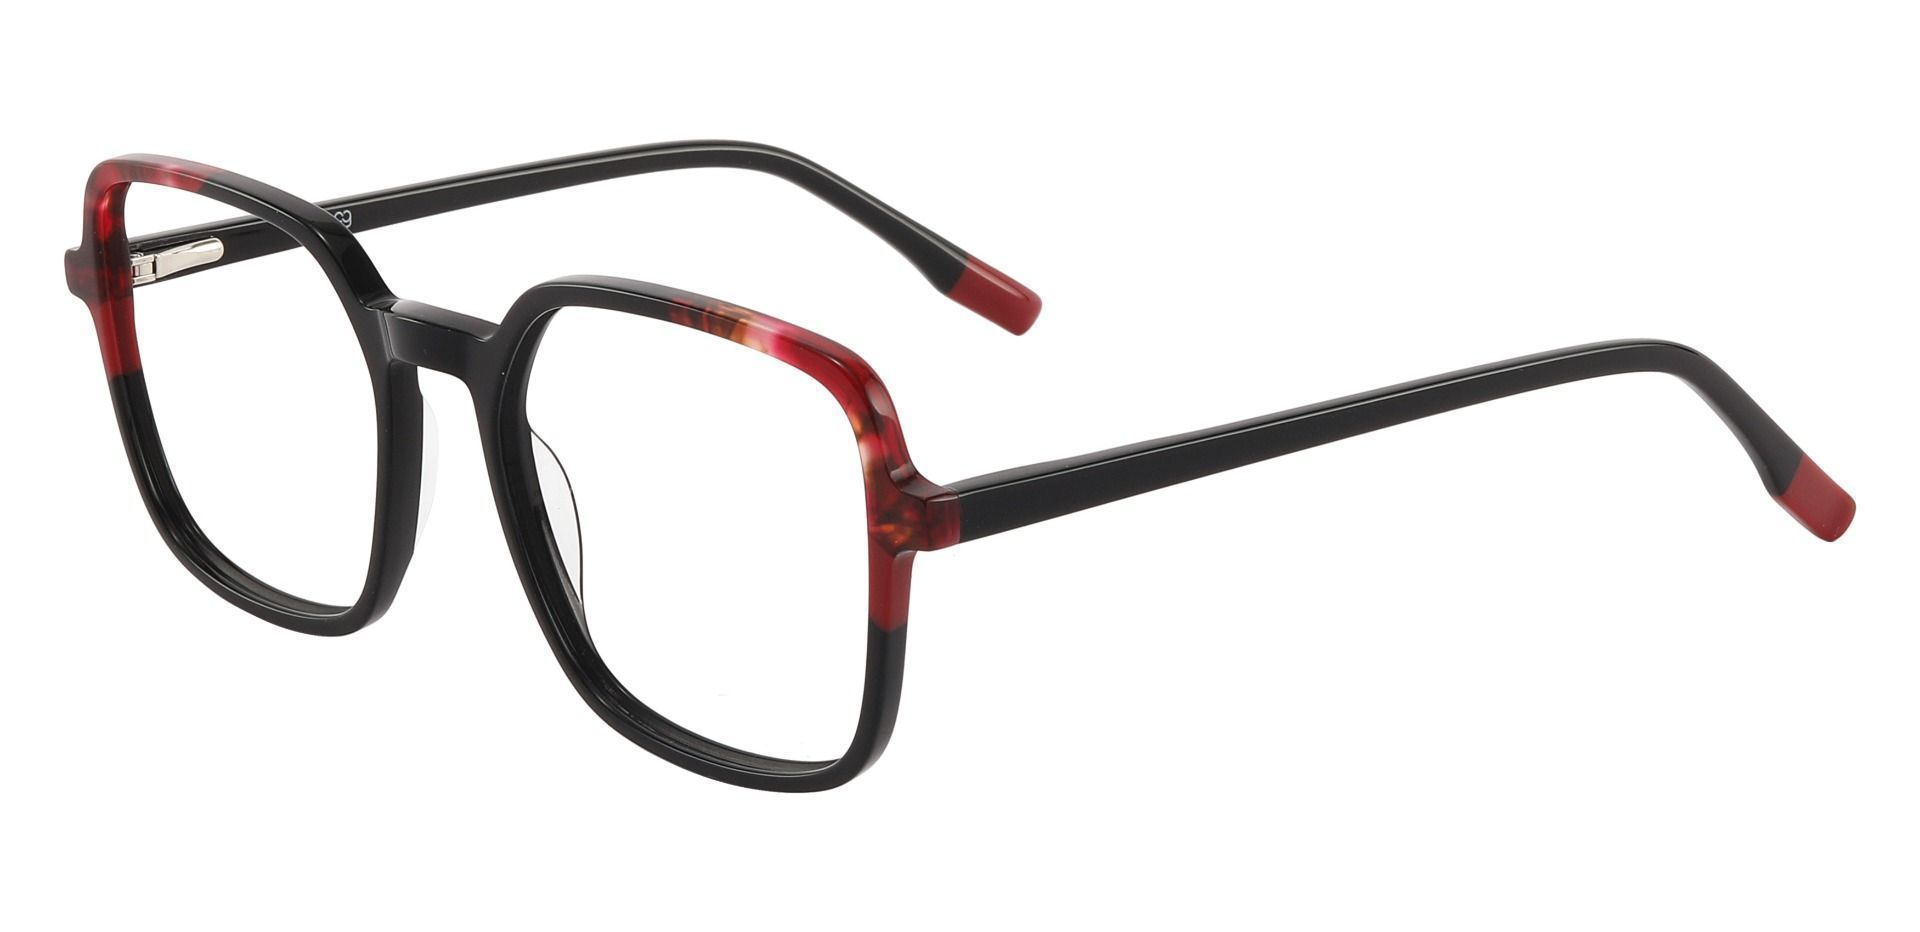 Medford Square Progressive Glasses - Black